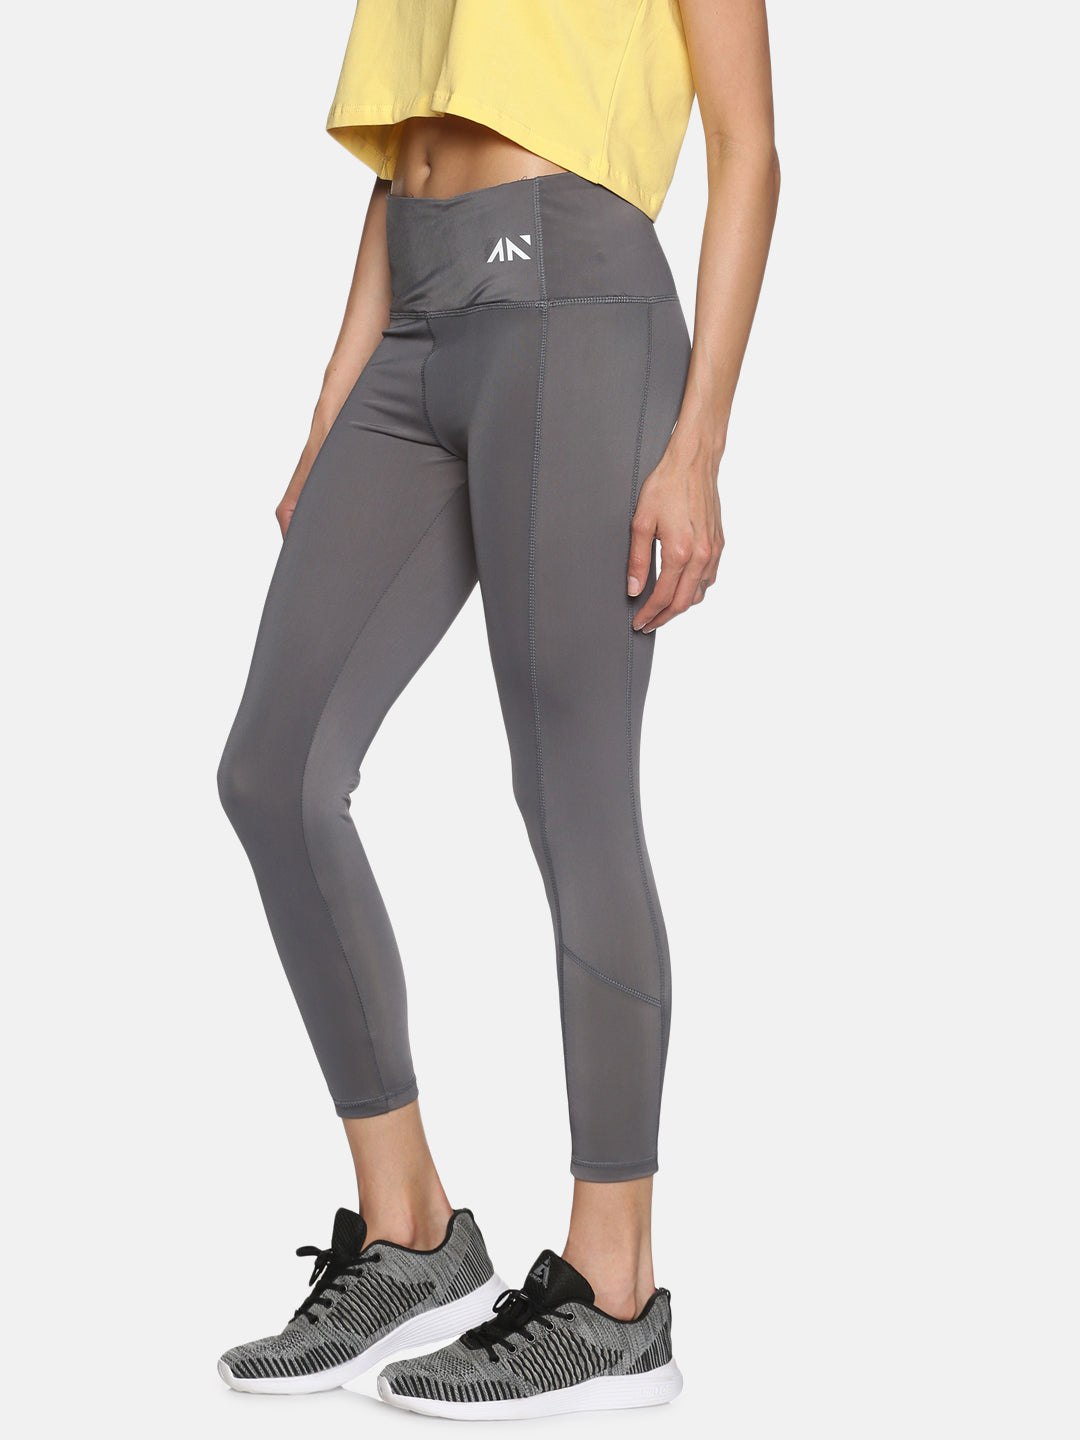 Gym Wear For Women, Womens Sports Wear, Grey Yoga Pants